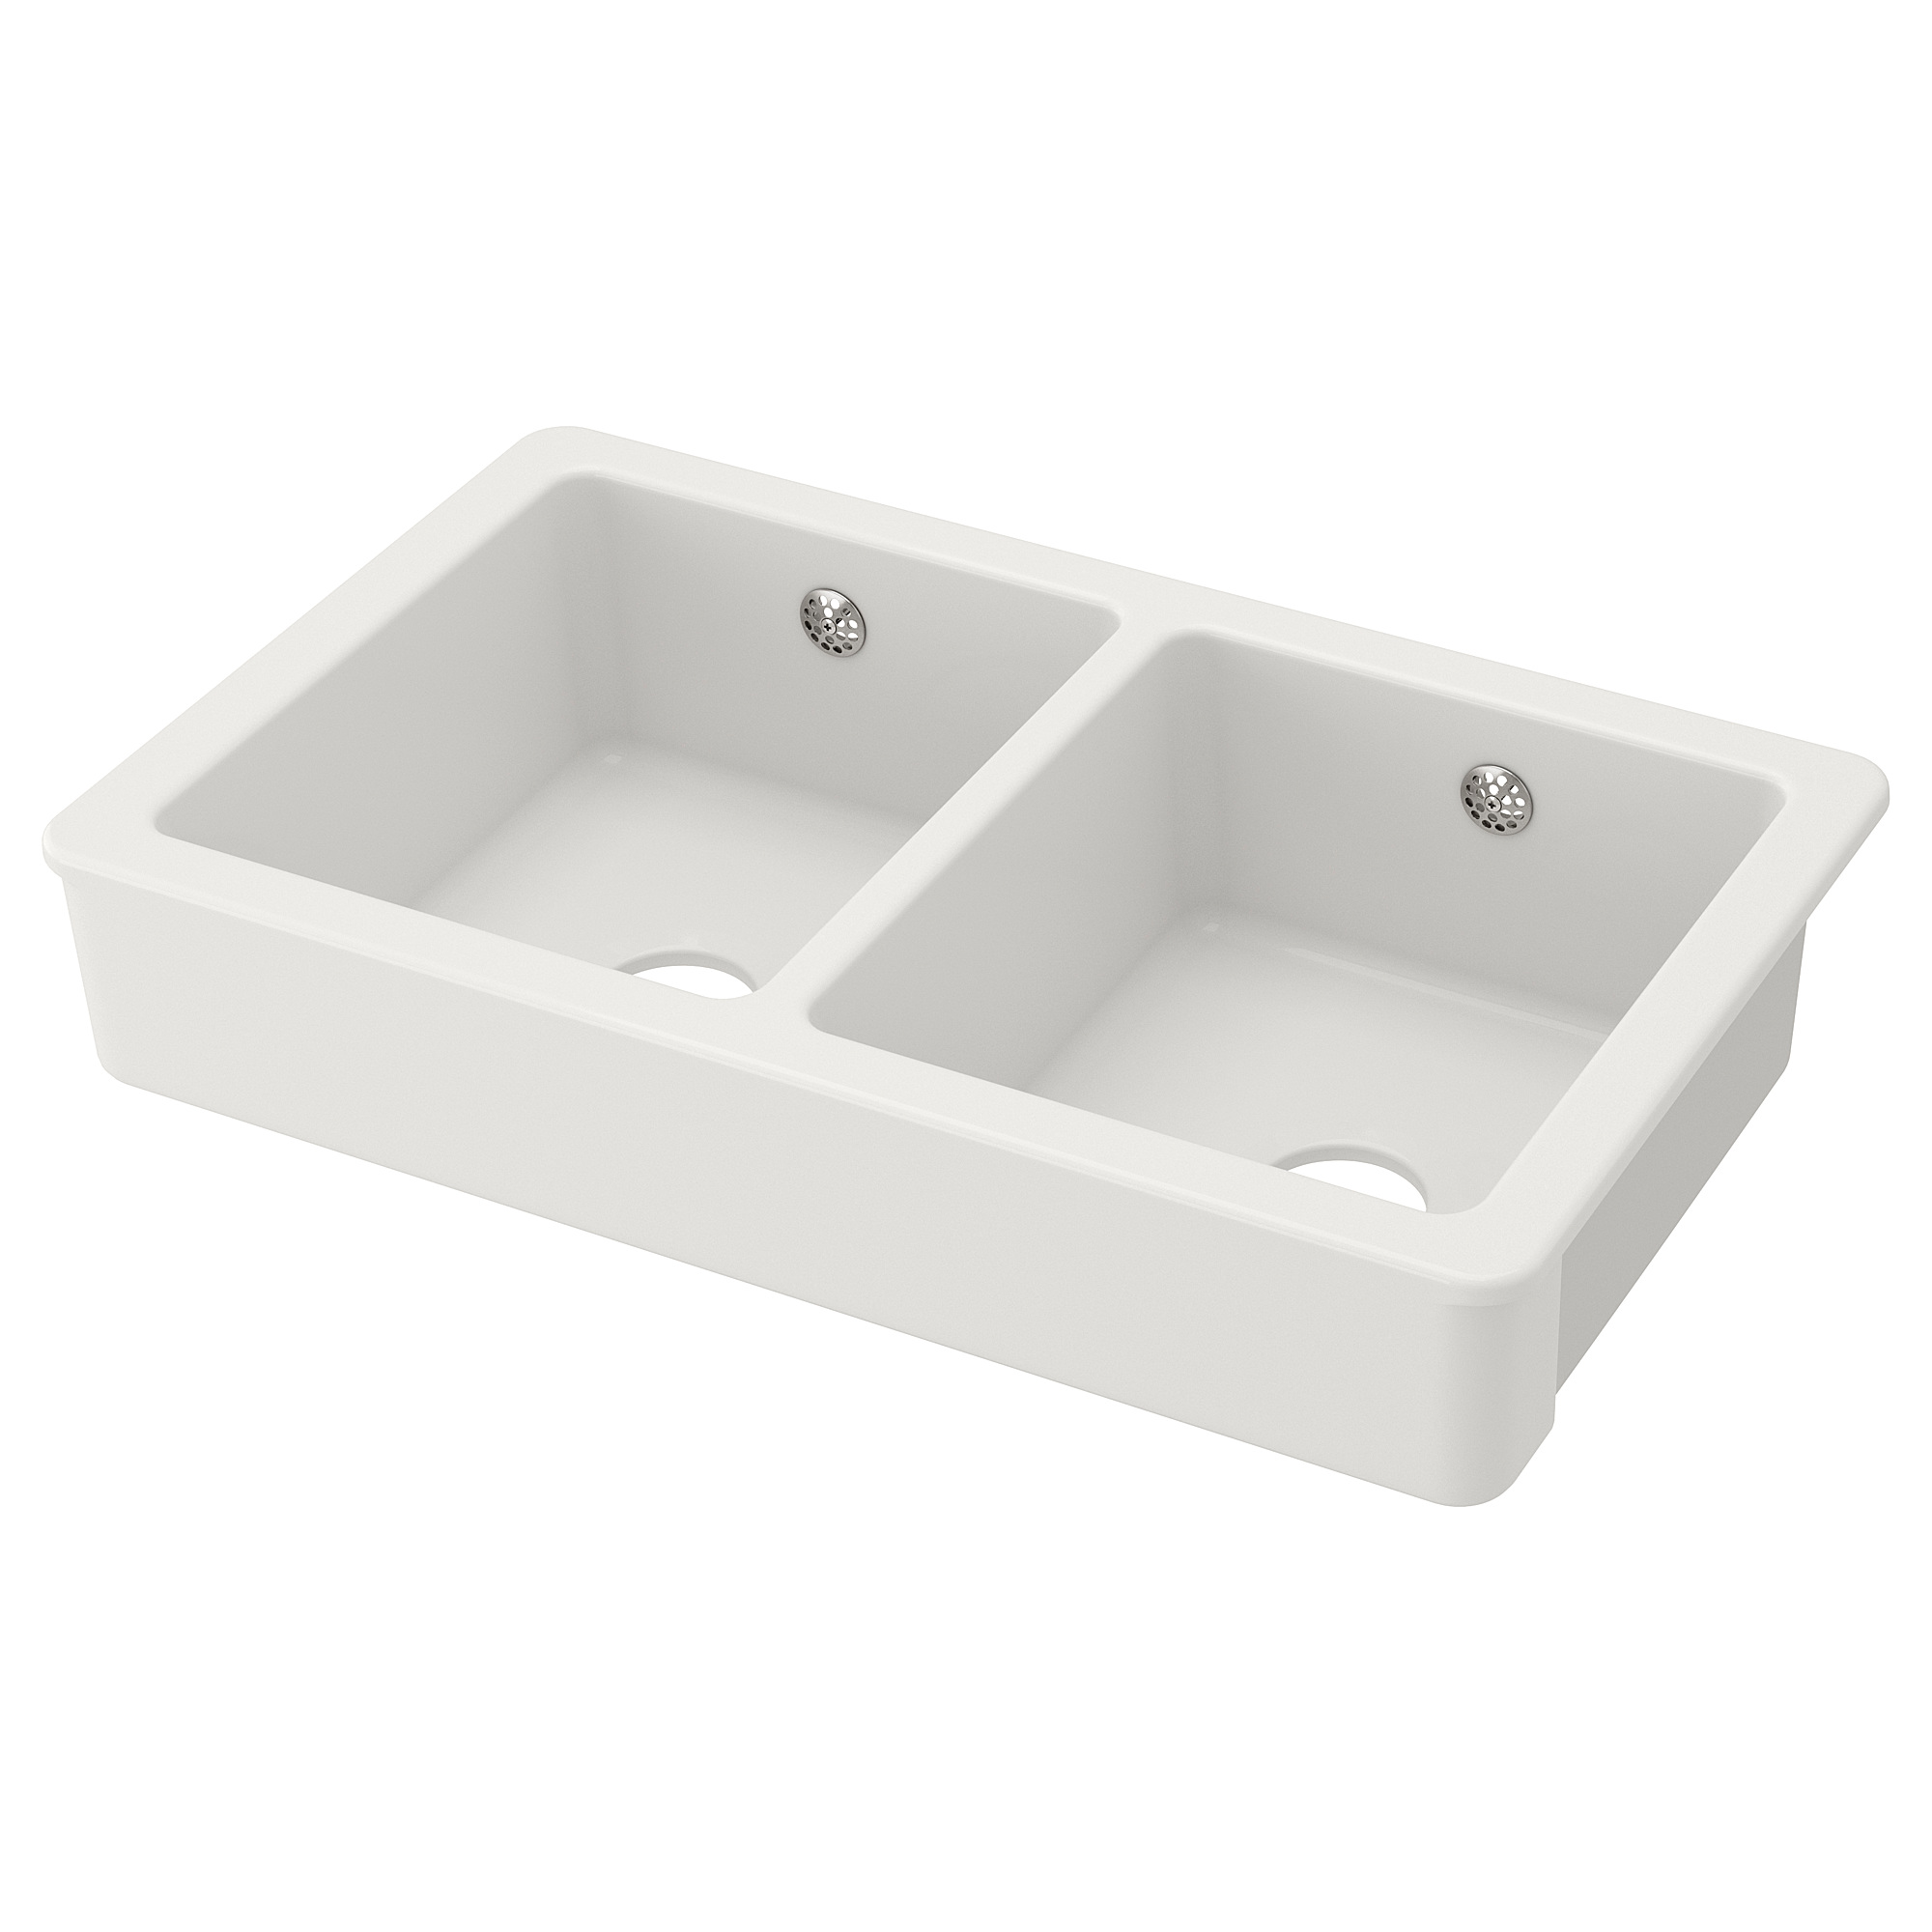 HAVSEN sink bowl, 2 bowls w visible front